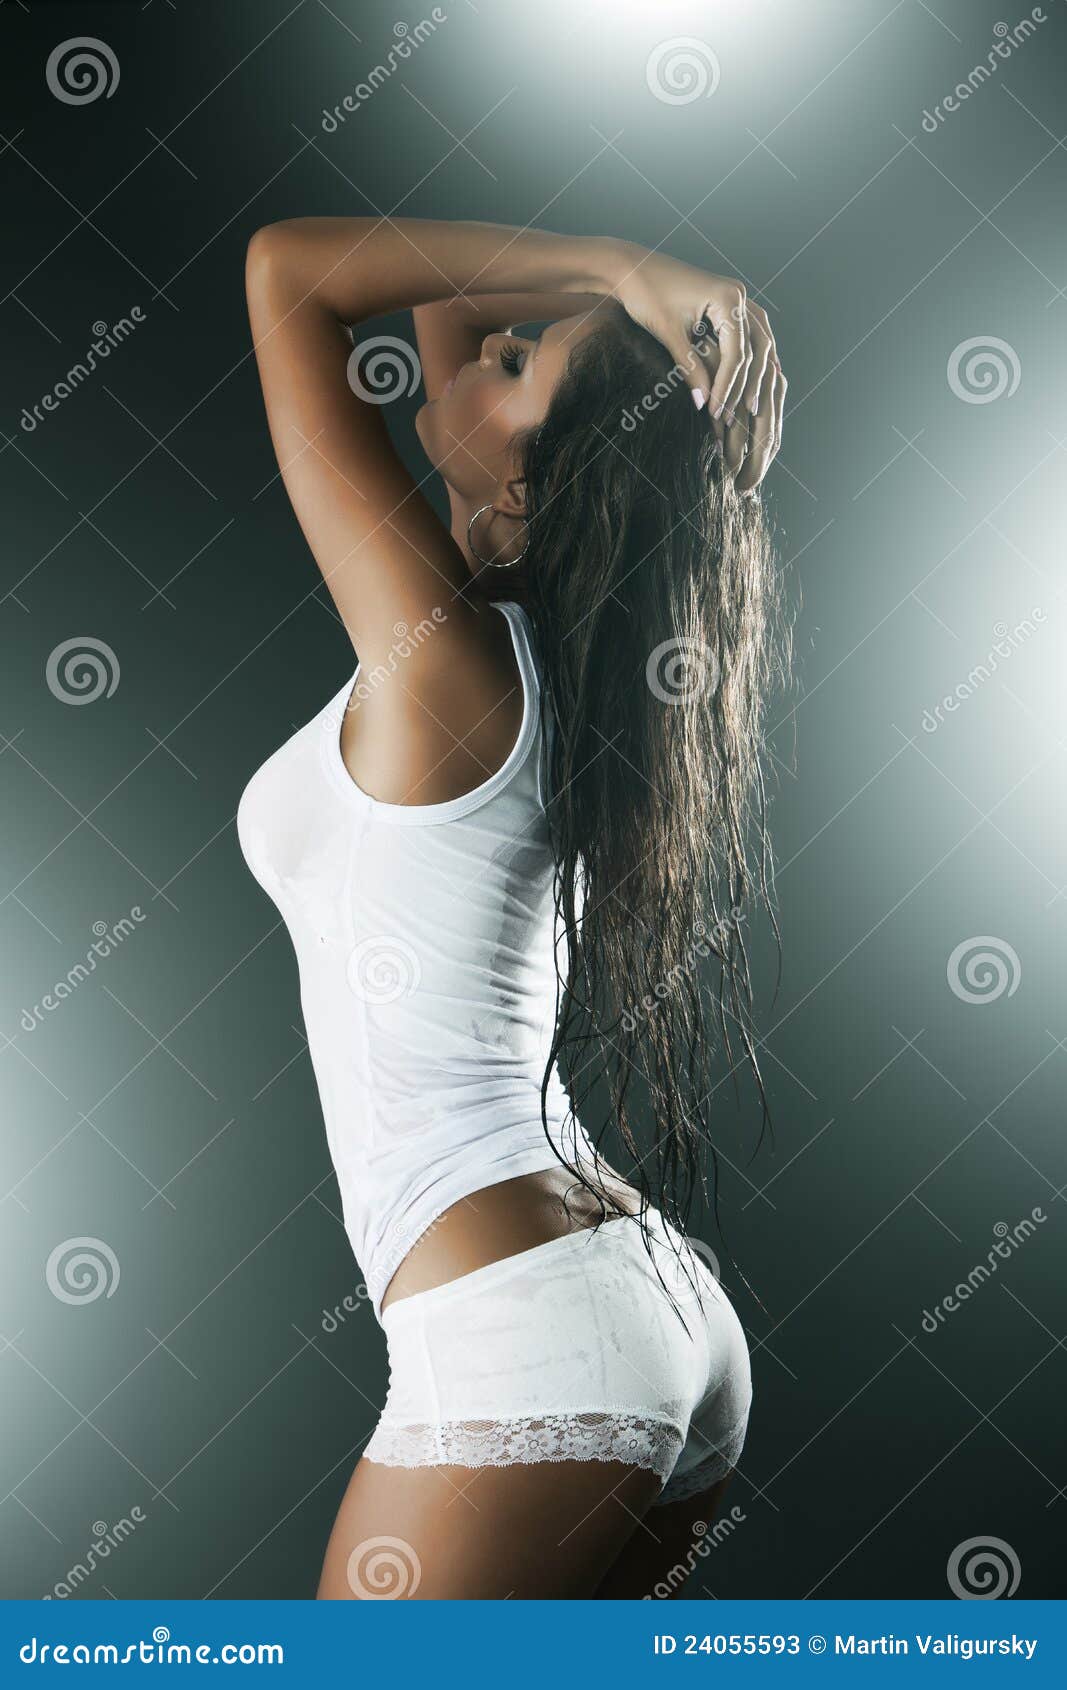 Woman Wearing White Tank Top and Panties Stock Image - Image of